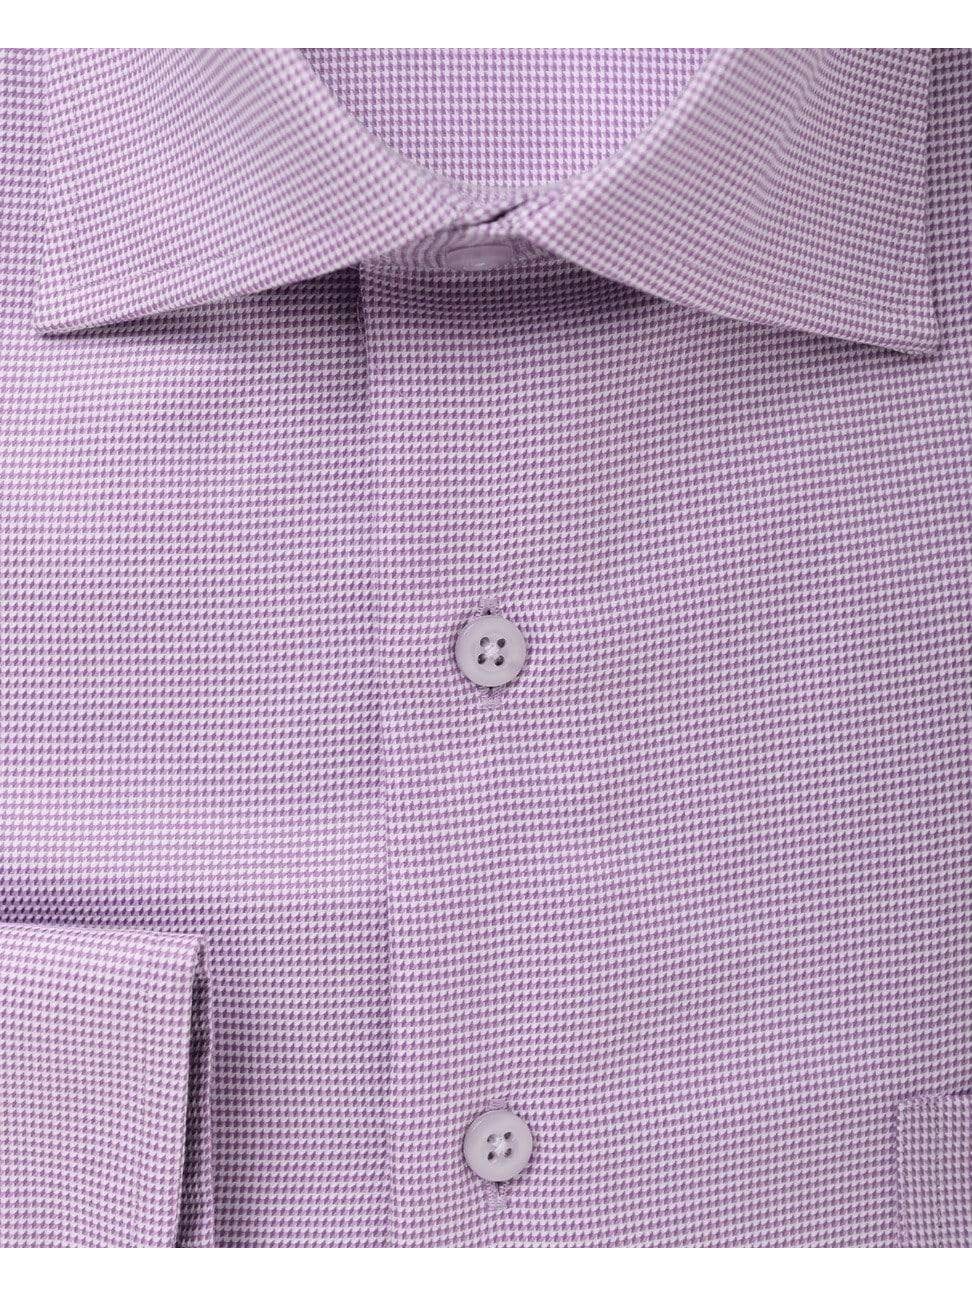 Proper Shirtings SHIRTS Mens 100% Cotton Purple Houndstooth Spread Collar Wrinkle Free Dress Shirt